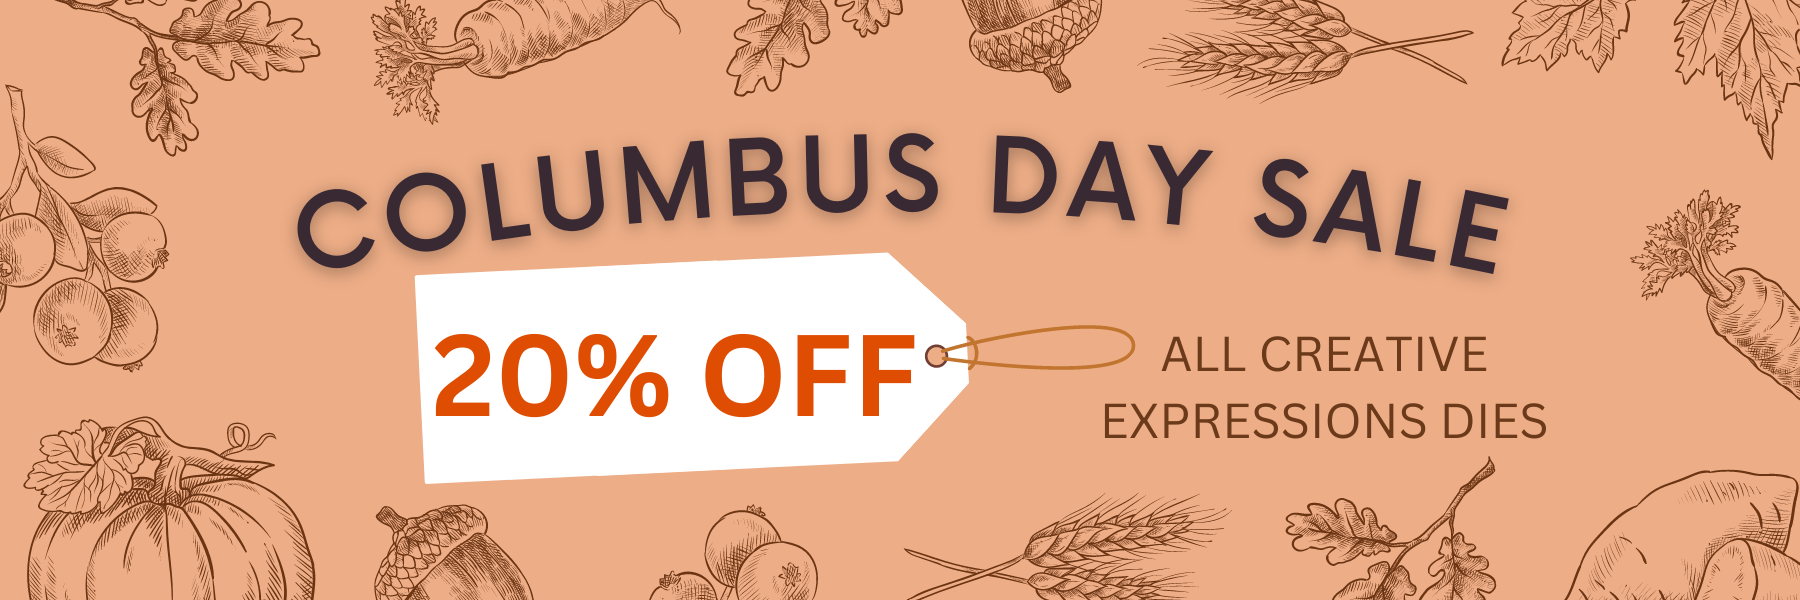 Columbus Day Sale